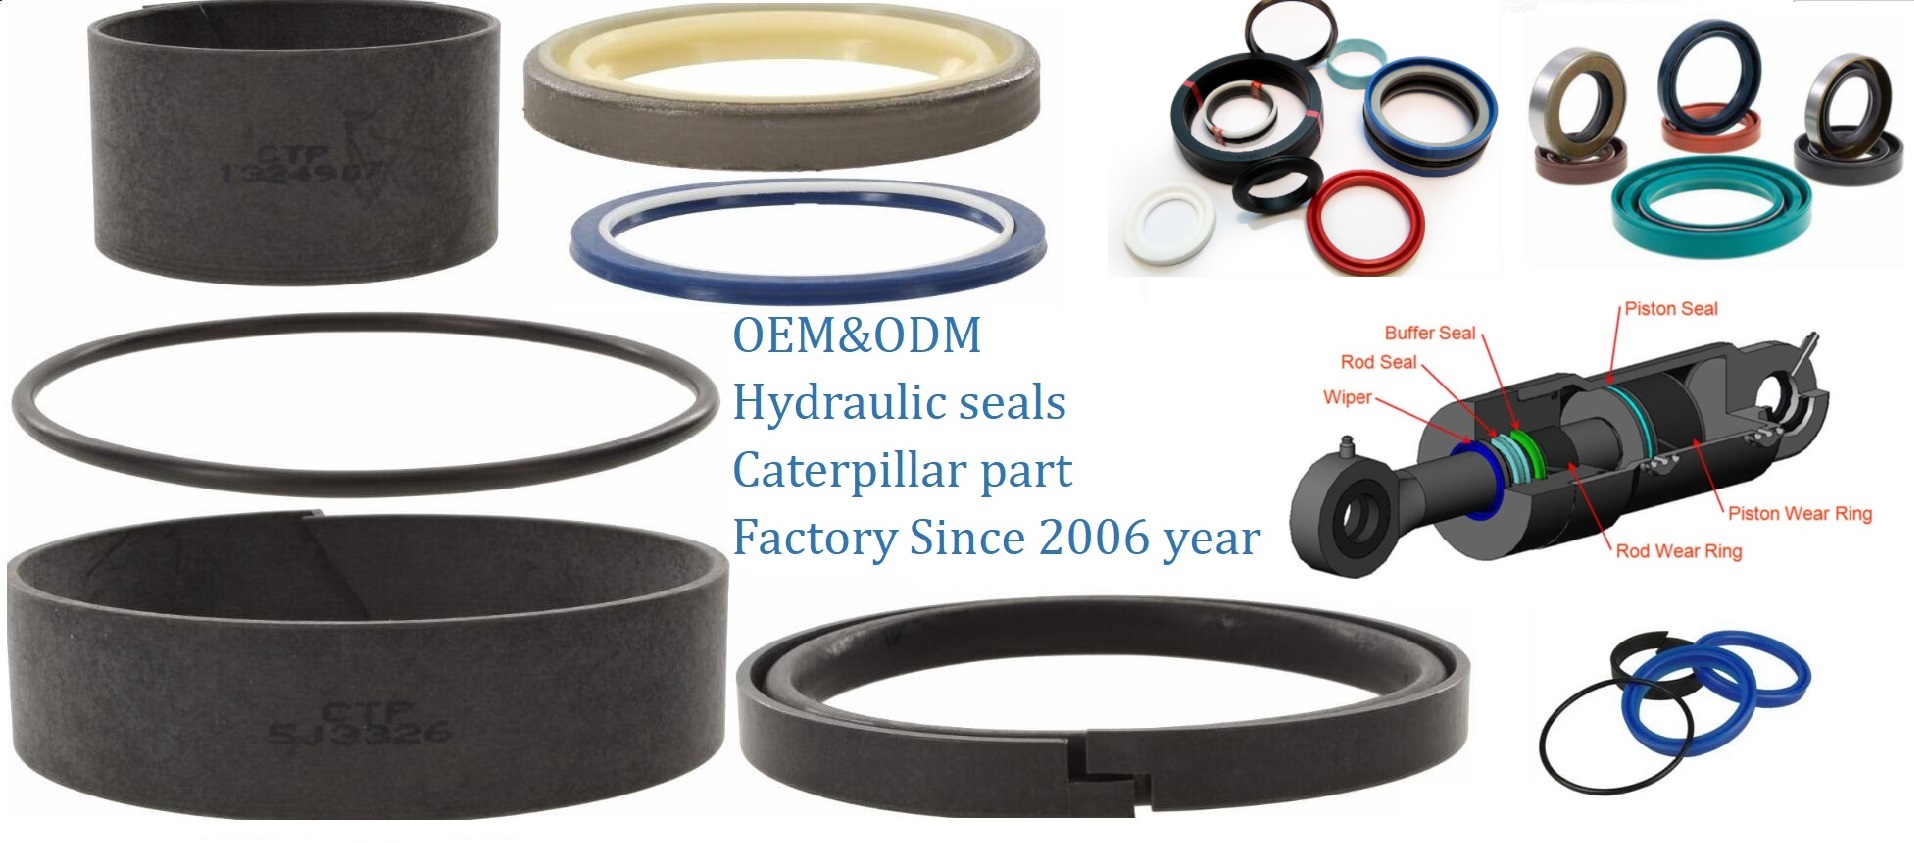 OEM&ODM  
Hydraulic seals
Caterpillar part
Factory Since 2006 year 